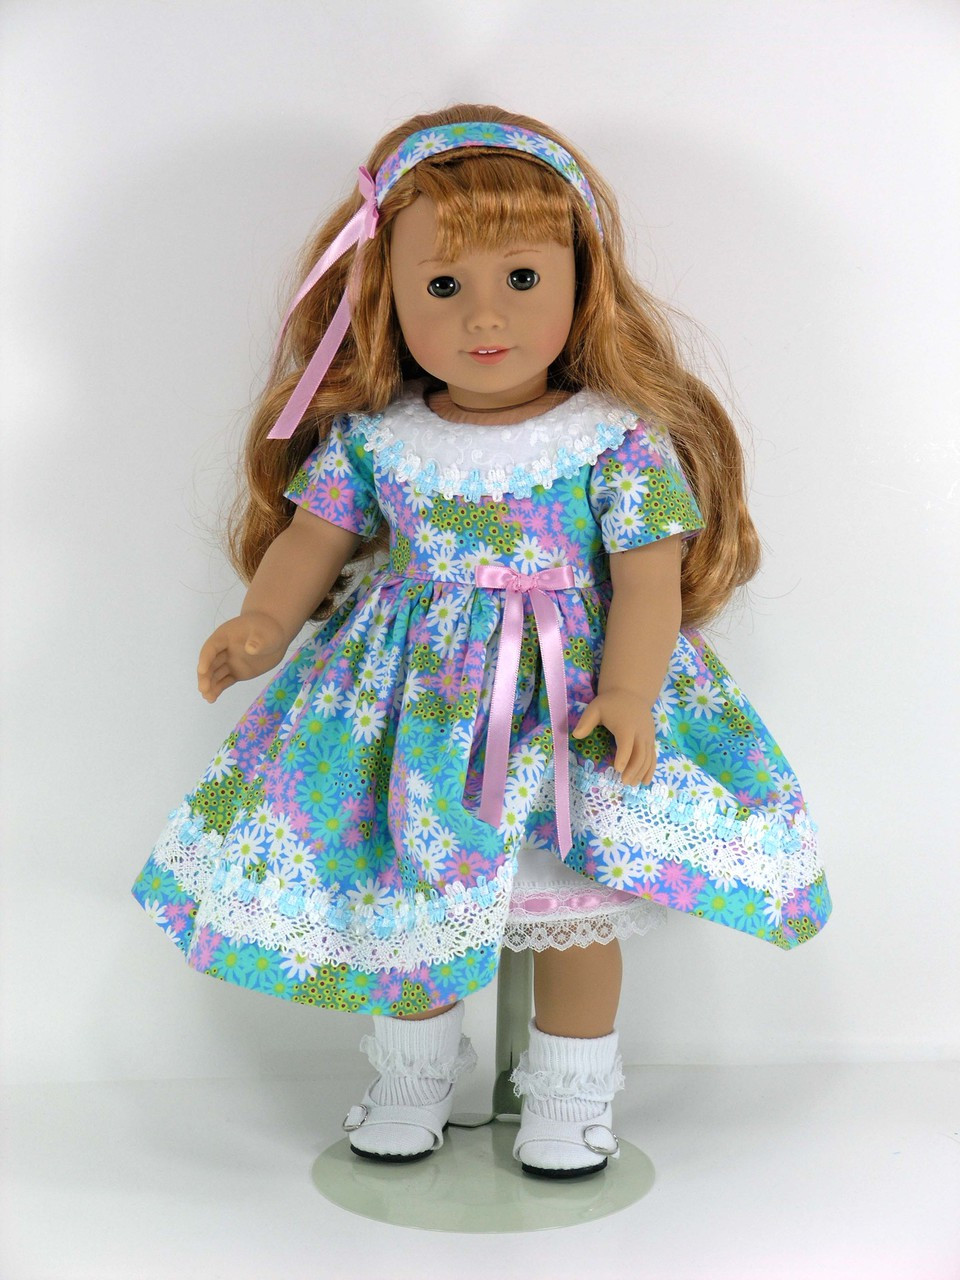 Handmade Clothes for American Doll - Dress, Headband, Pantaloons - Blue ...